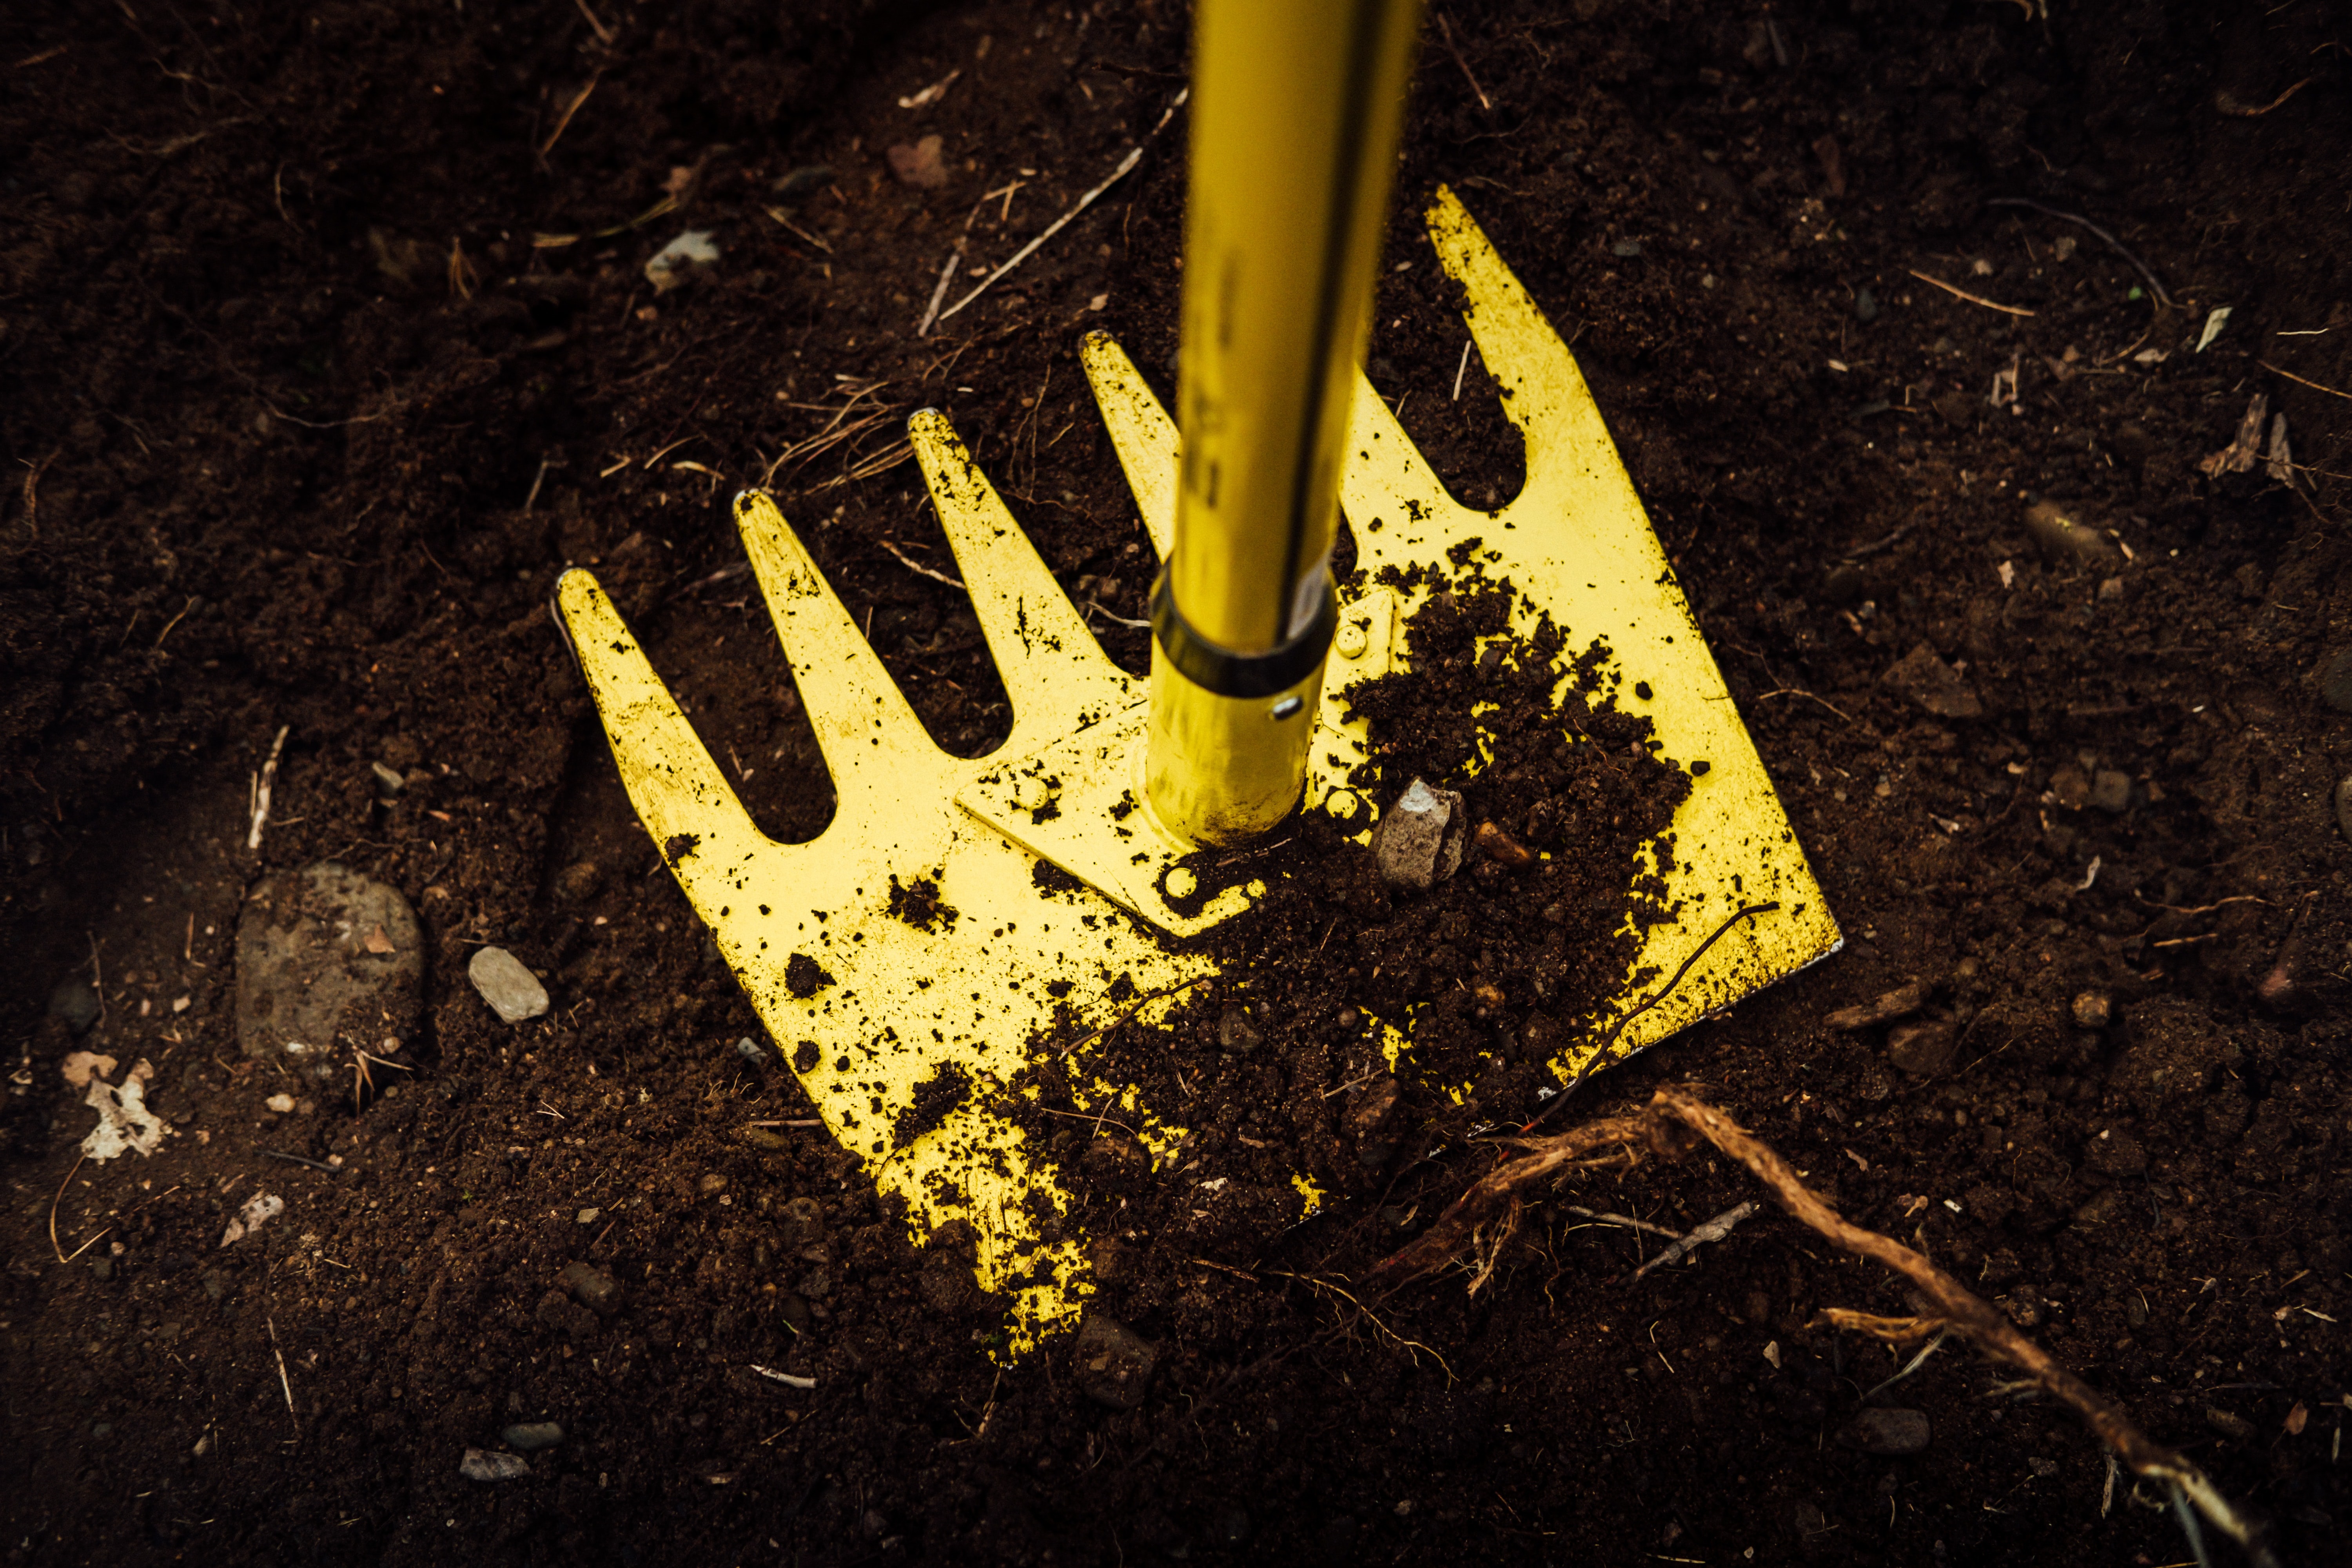 A yellow landscaping rake pressed into dark brown dirt